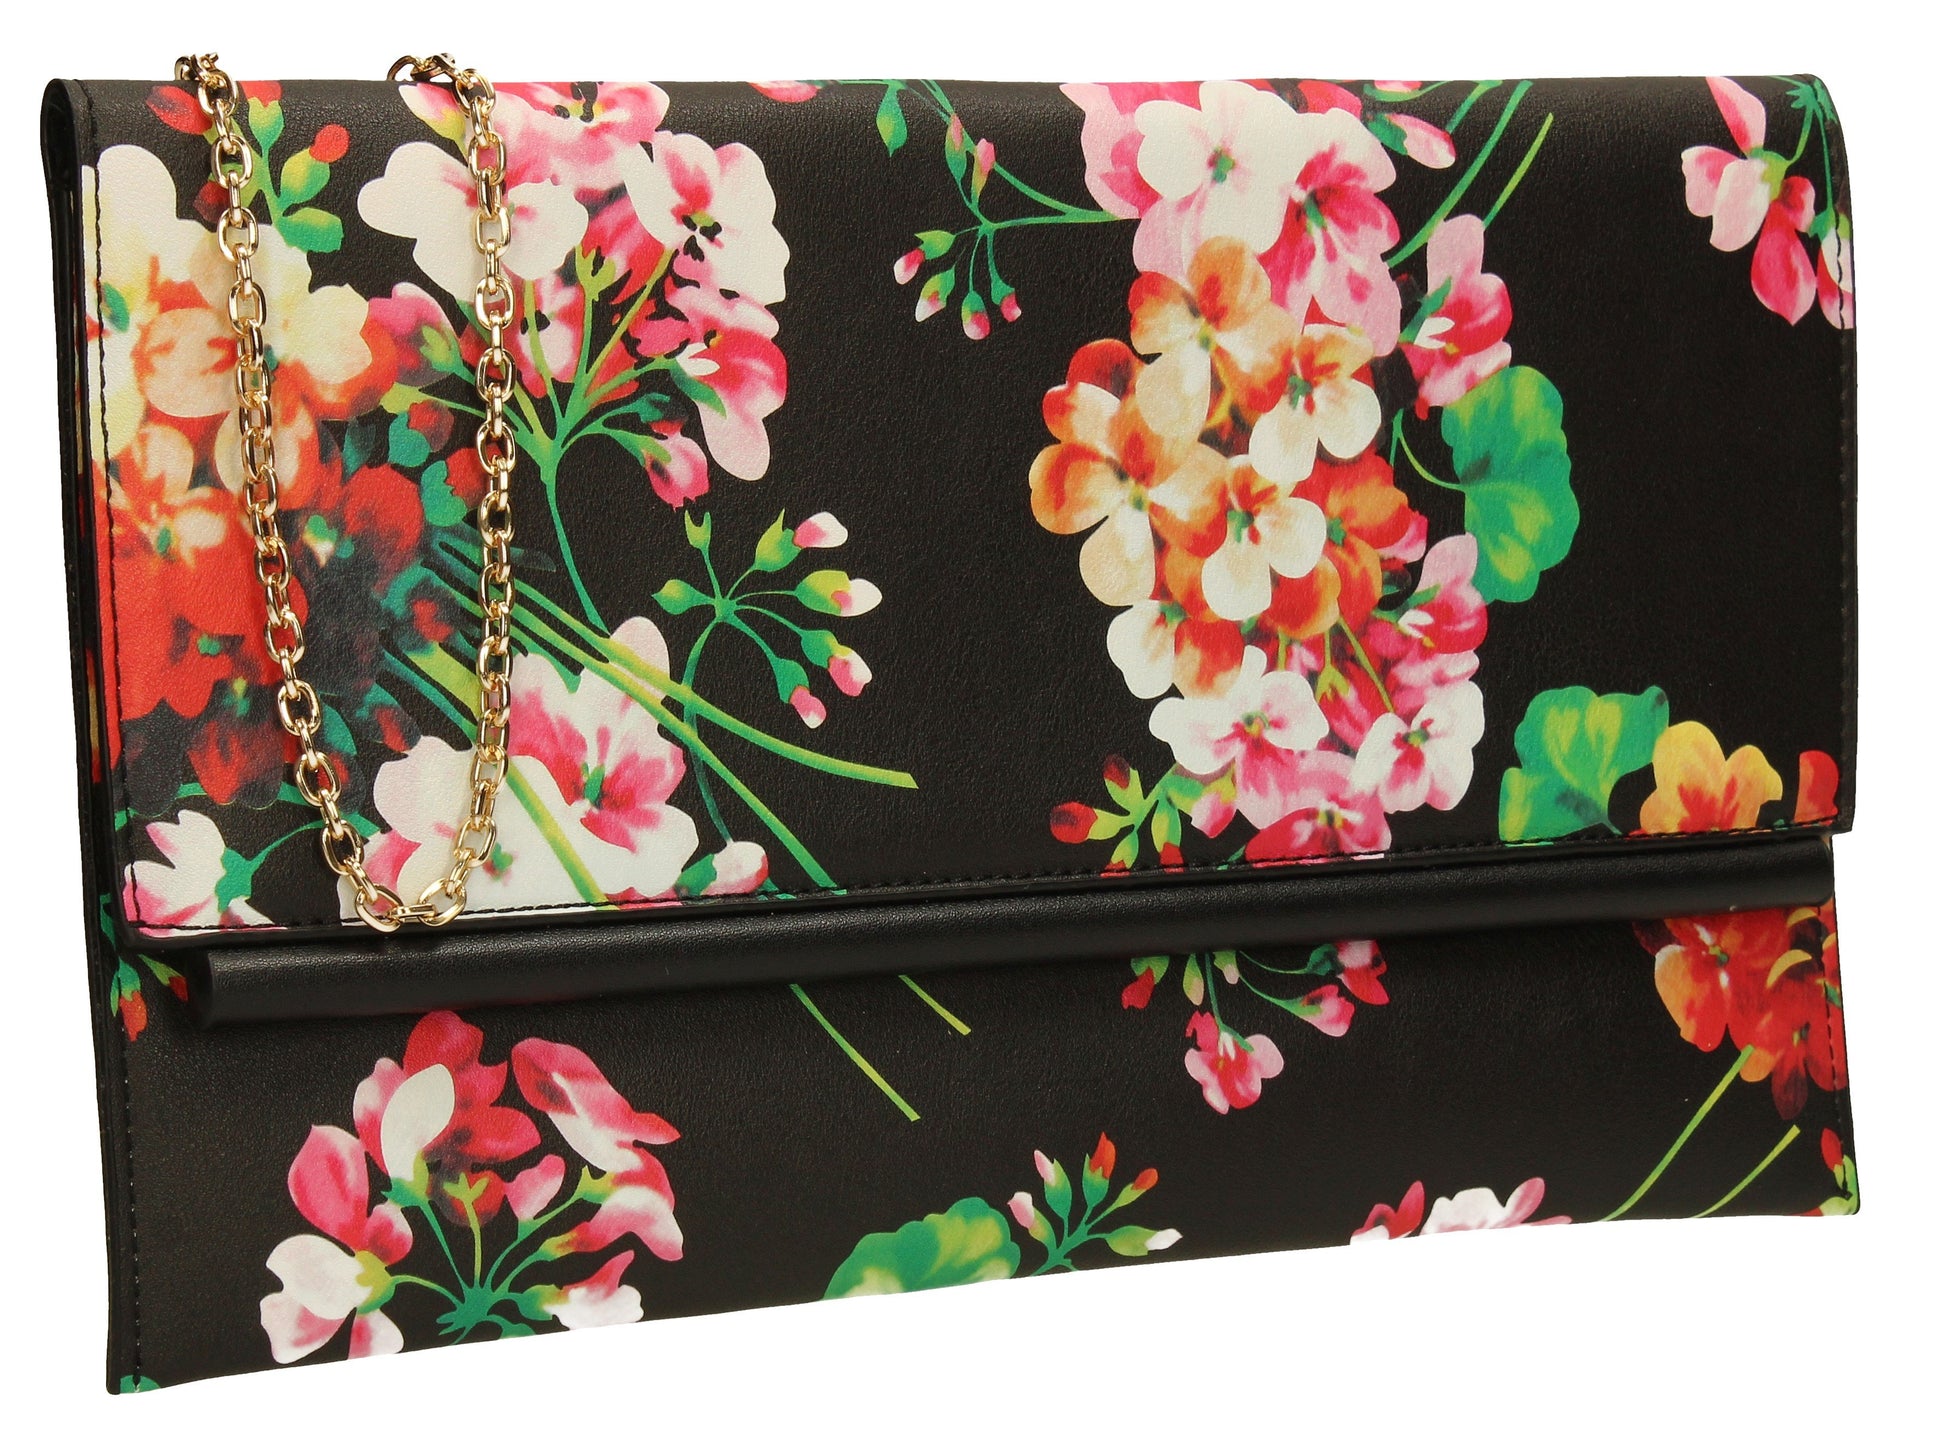 SWANKYSWANS Kate Floral Clutch Bag Black Cute Cheap Clutch Bag For Weddings School and Work